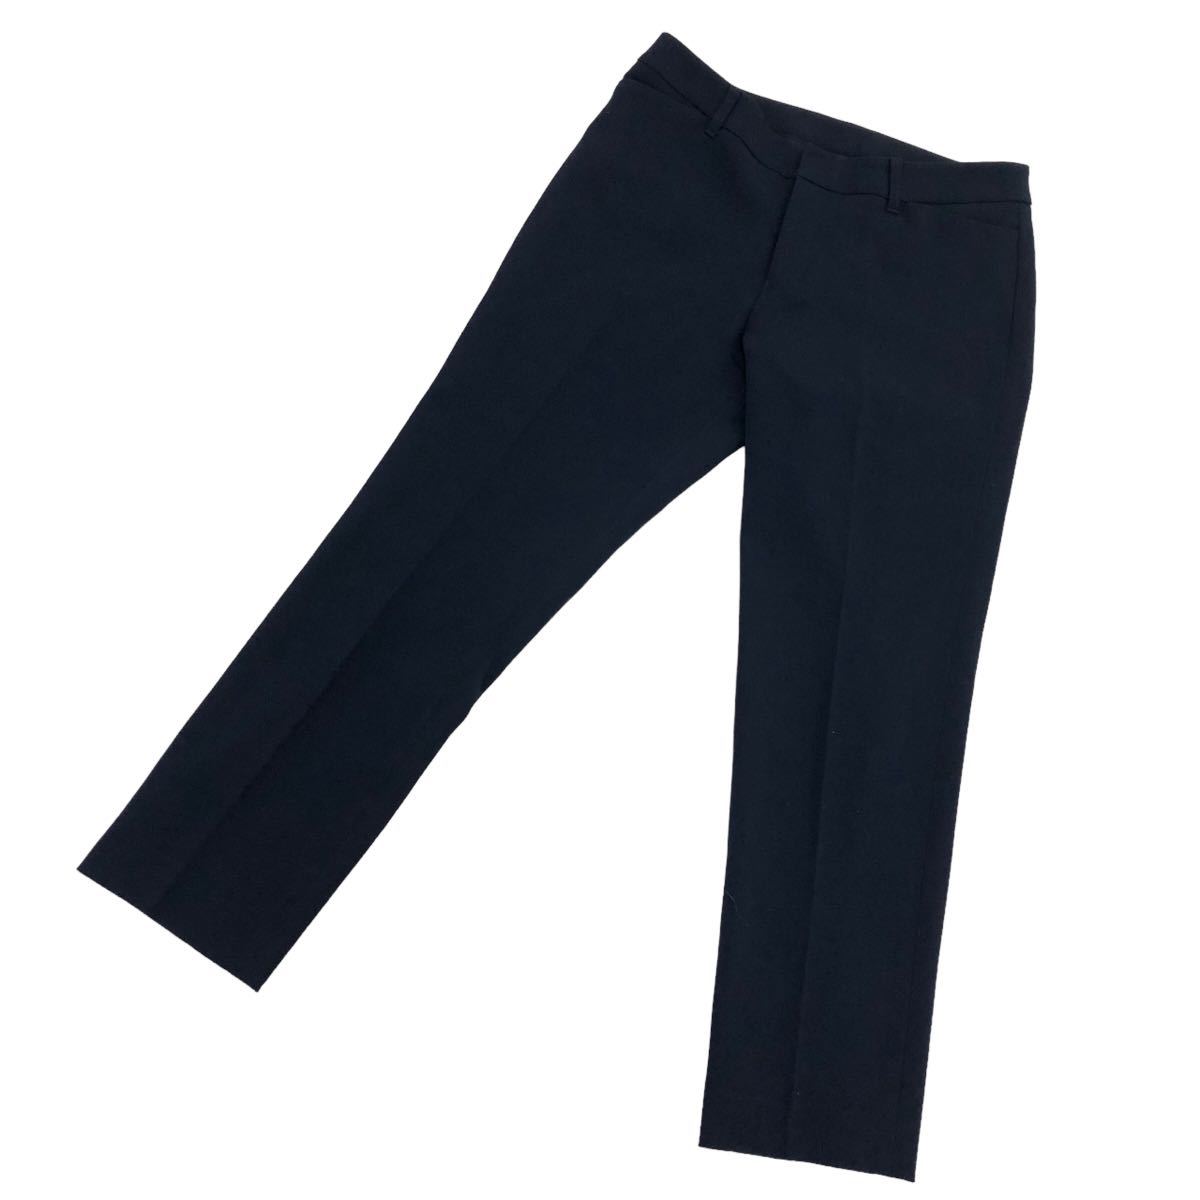 S169 AMACAa мака брюки конические брюки низ слаксы женский 40 темно-синий темно-синий 